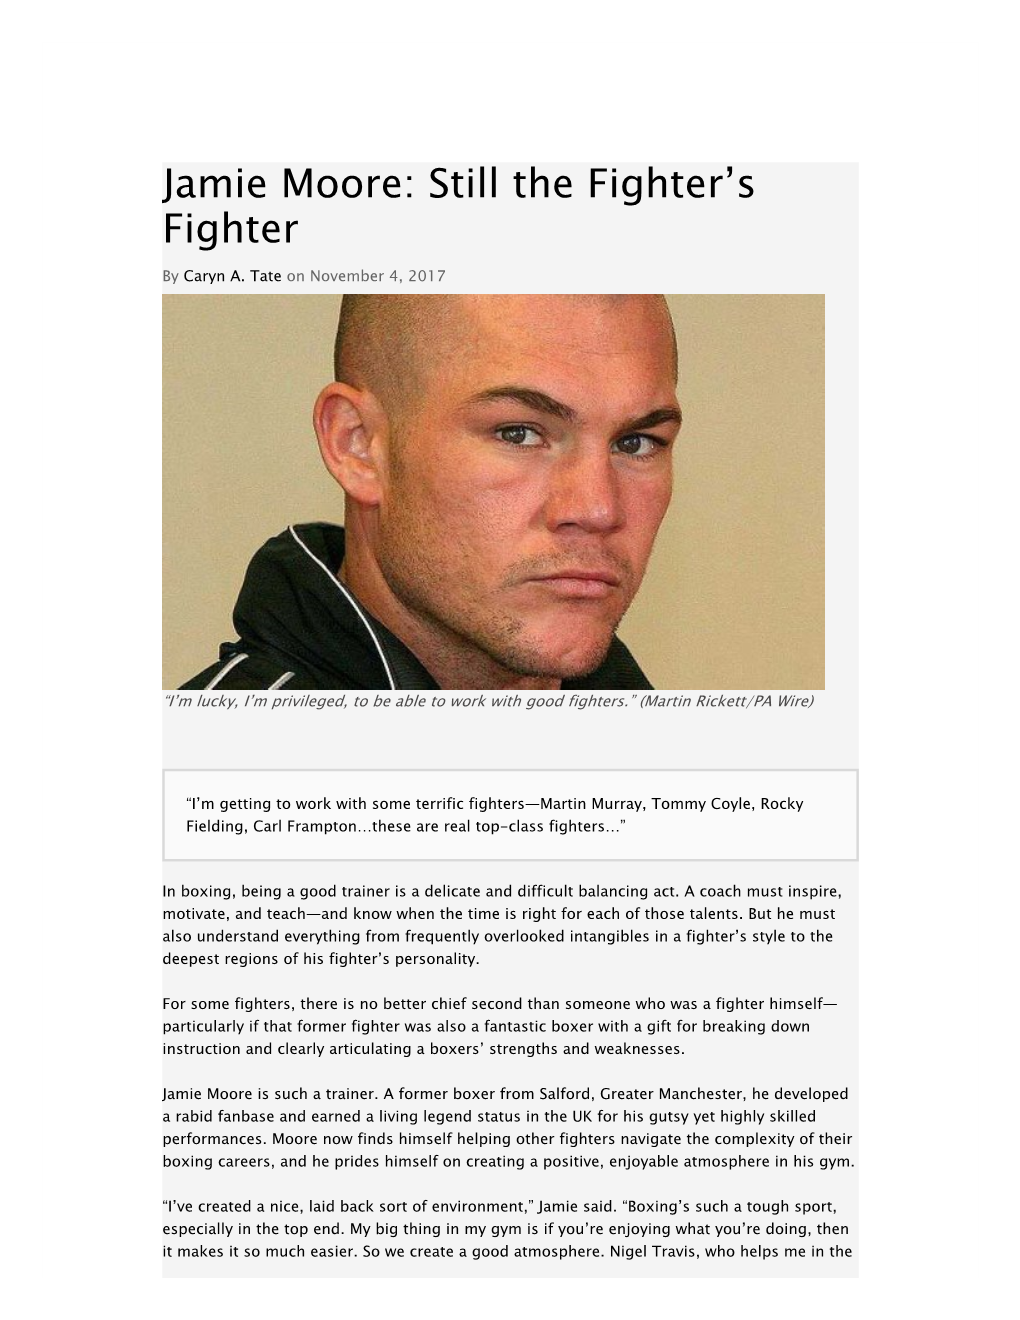 Jamie Moore: Still the Fighter's Fighter